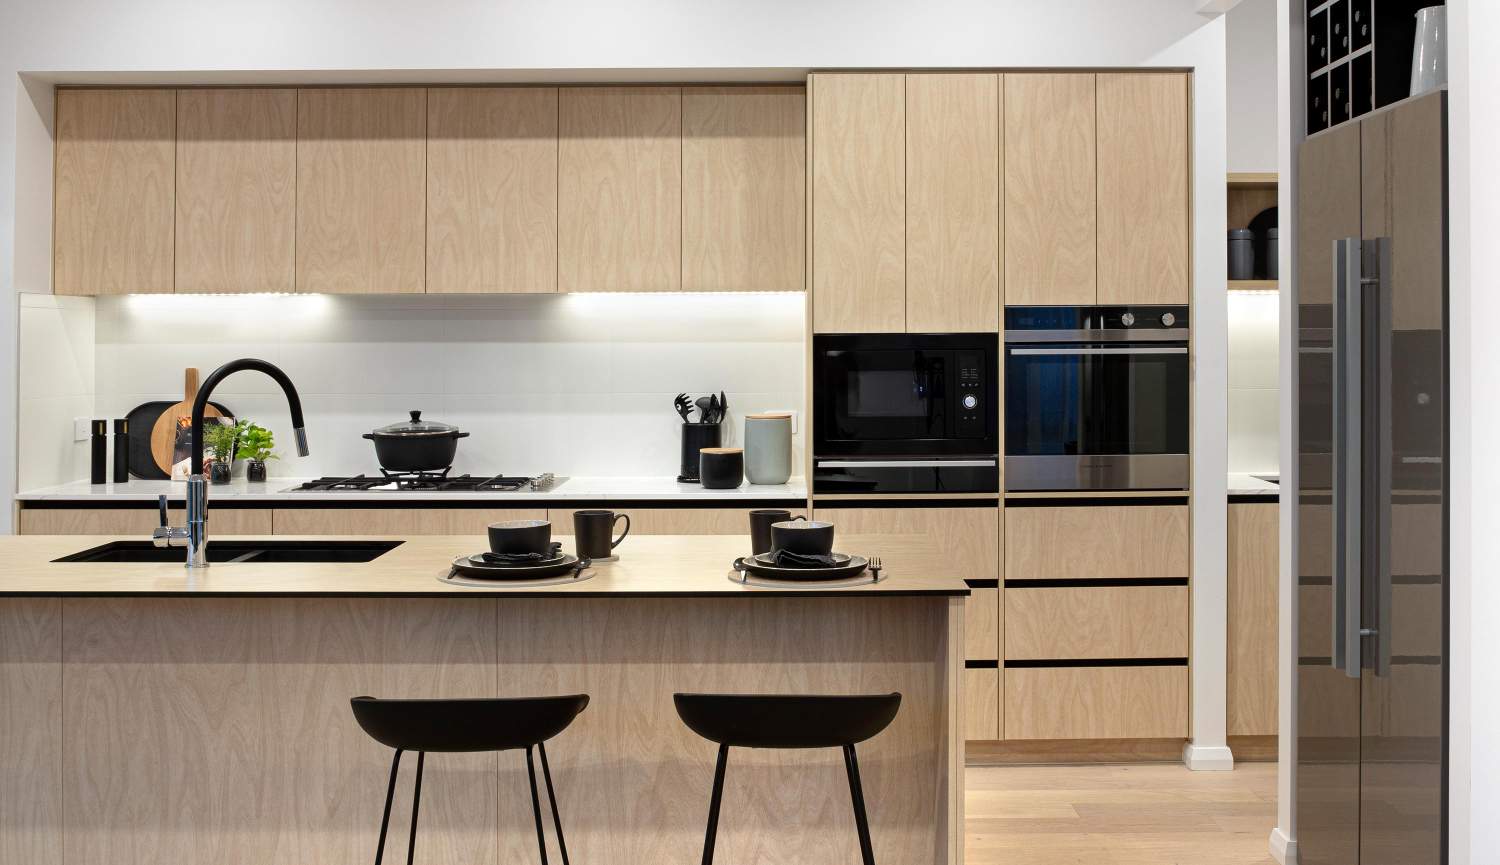 hindmarsh-single-storey-home-design-kitchen